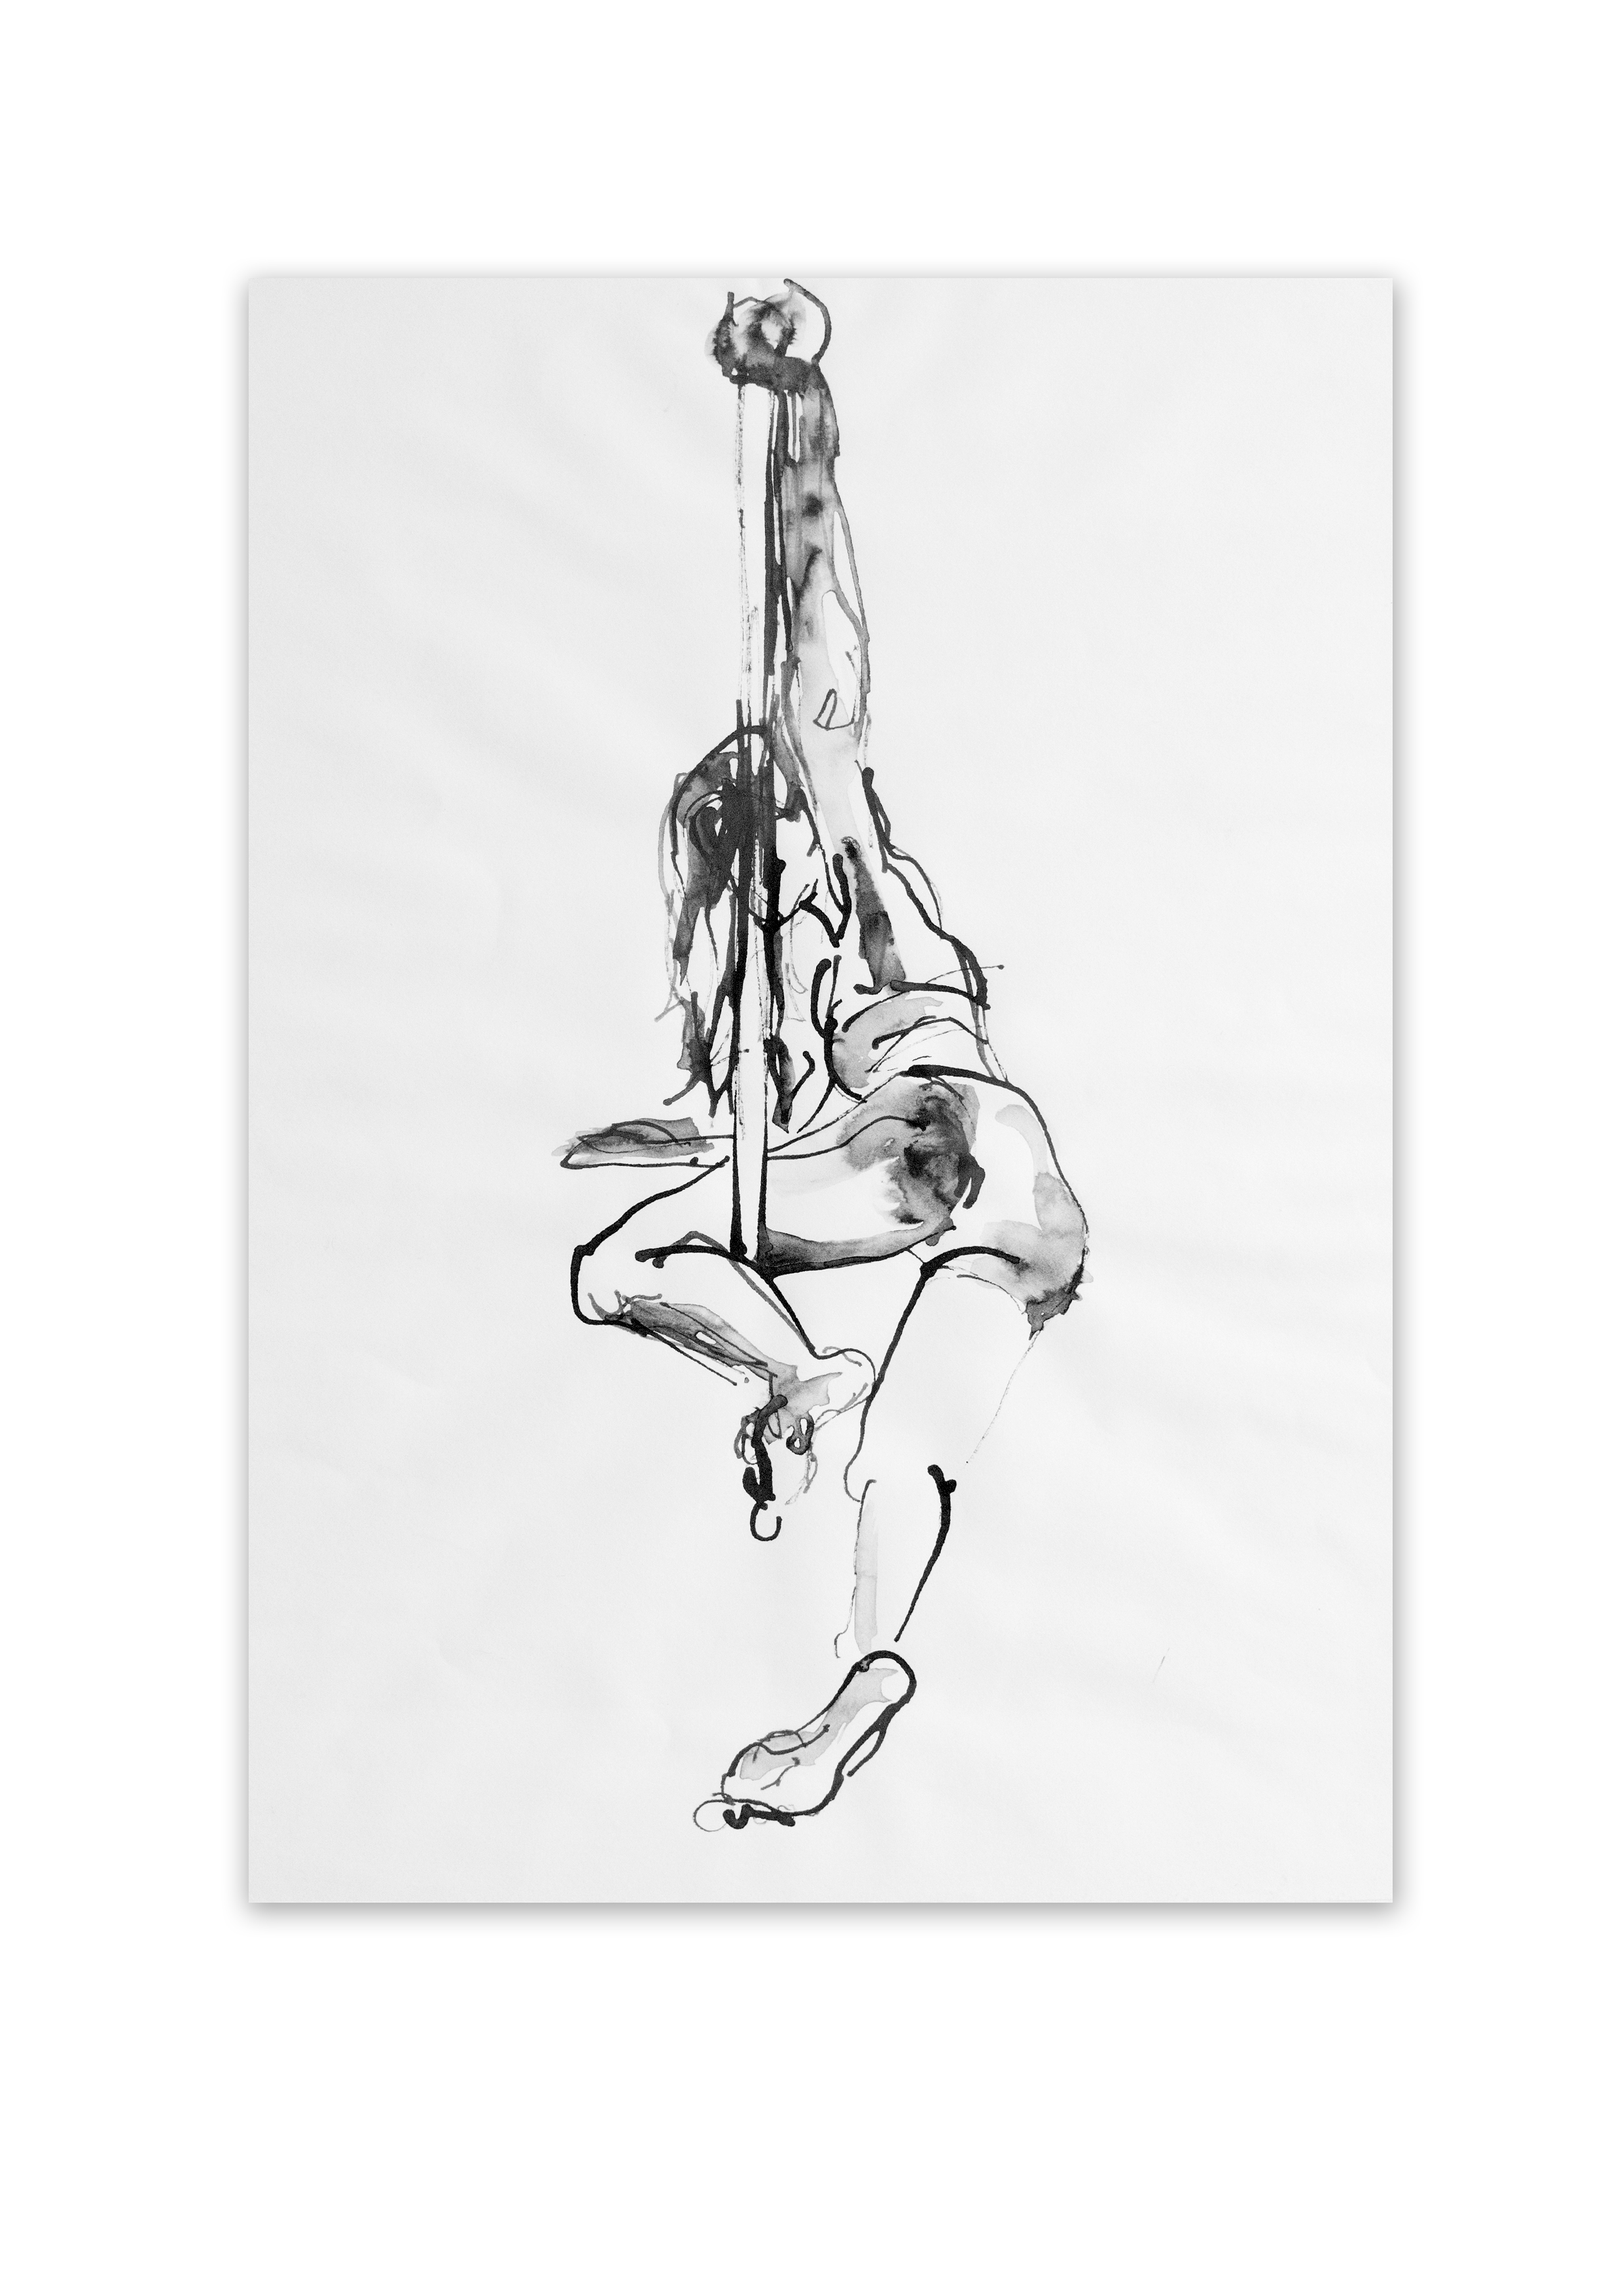 5_Pole-dancing-woman_ink-on-paper.jpg